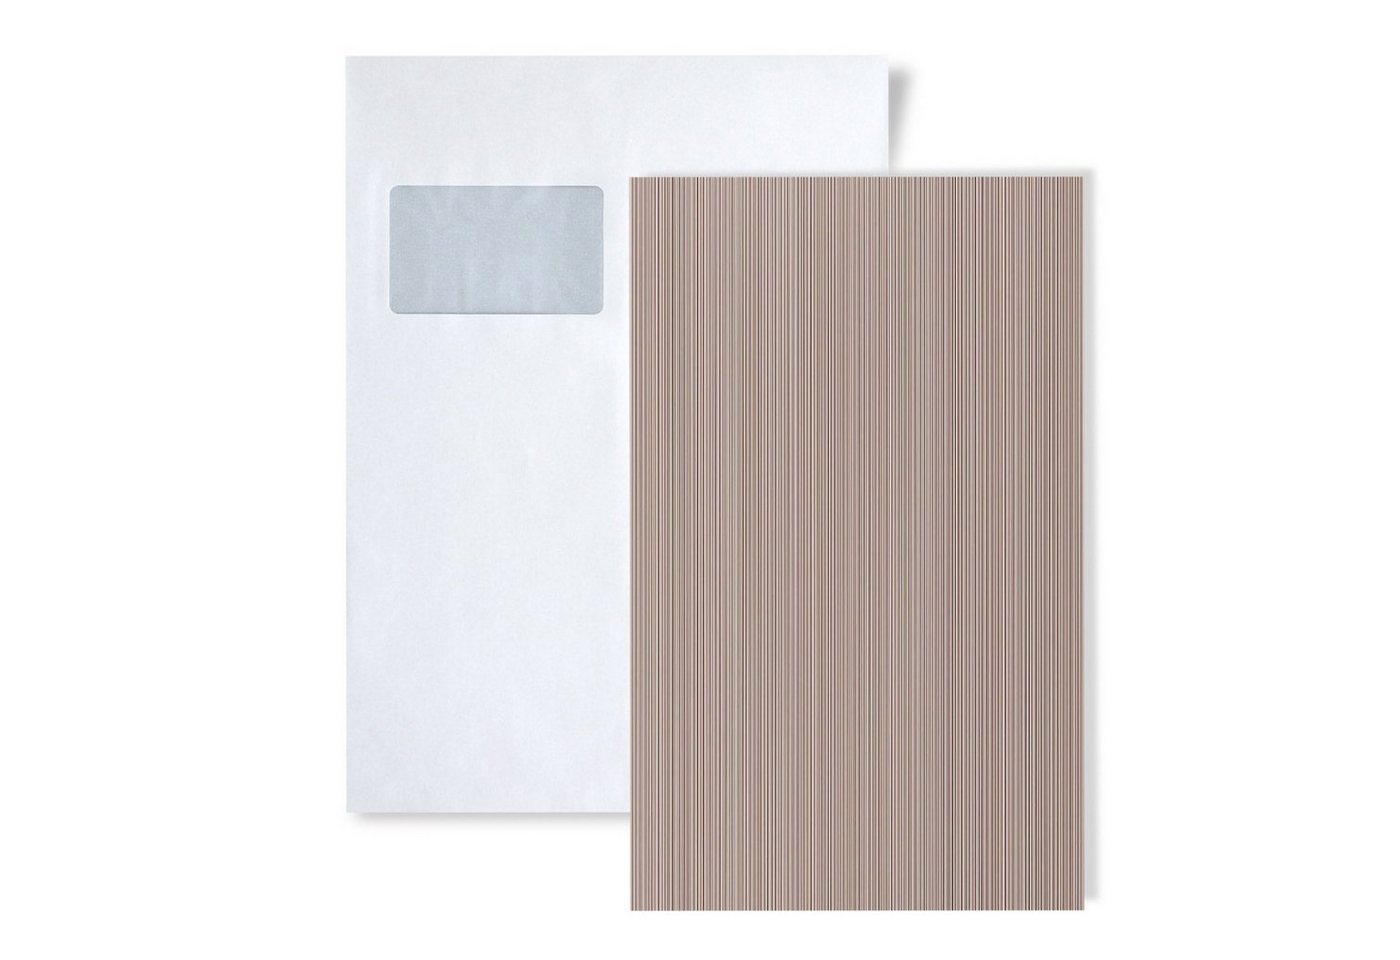 Edem Papiertapete S-598-23, gestreift, matt, unifarben, (1 Musterblatt, ca. A5-A4), braun, blass-braun, beige-braun von Edem